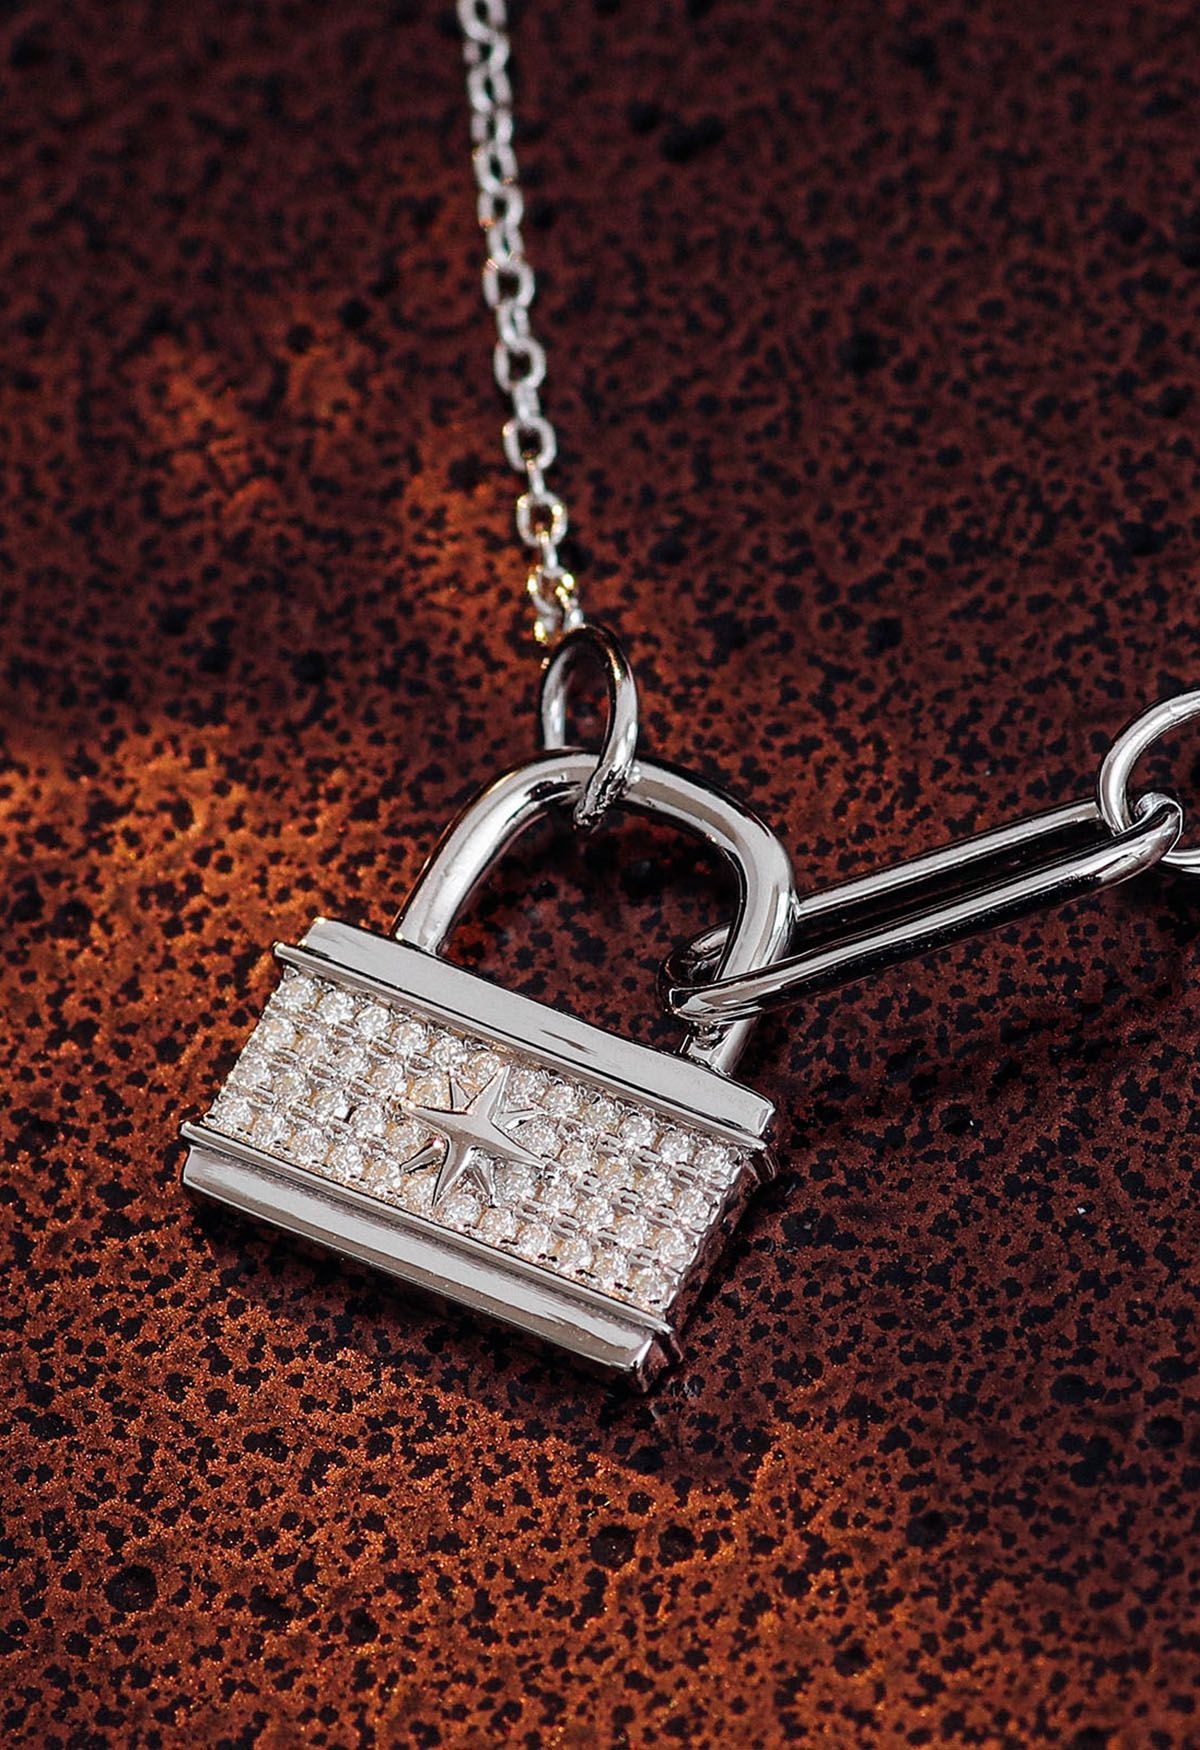 Star Lock Moissanite Diamond Necklace